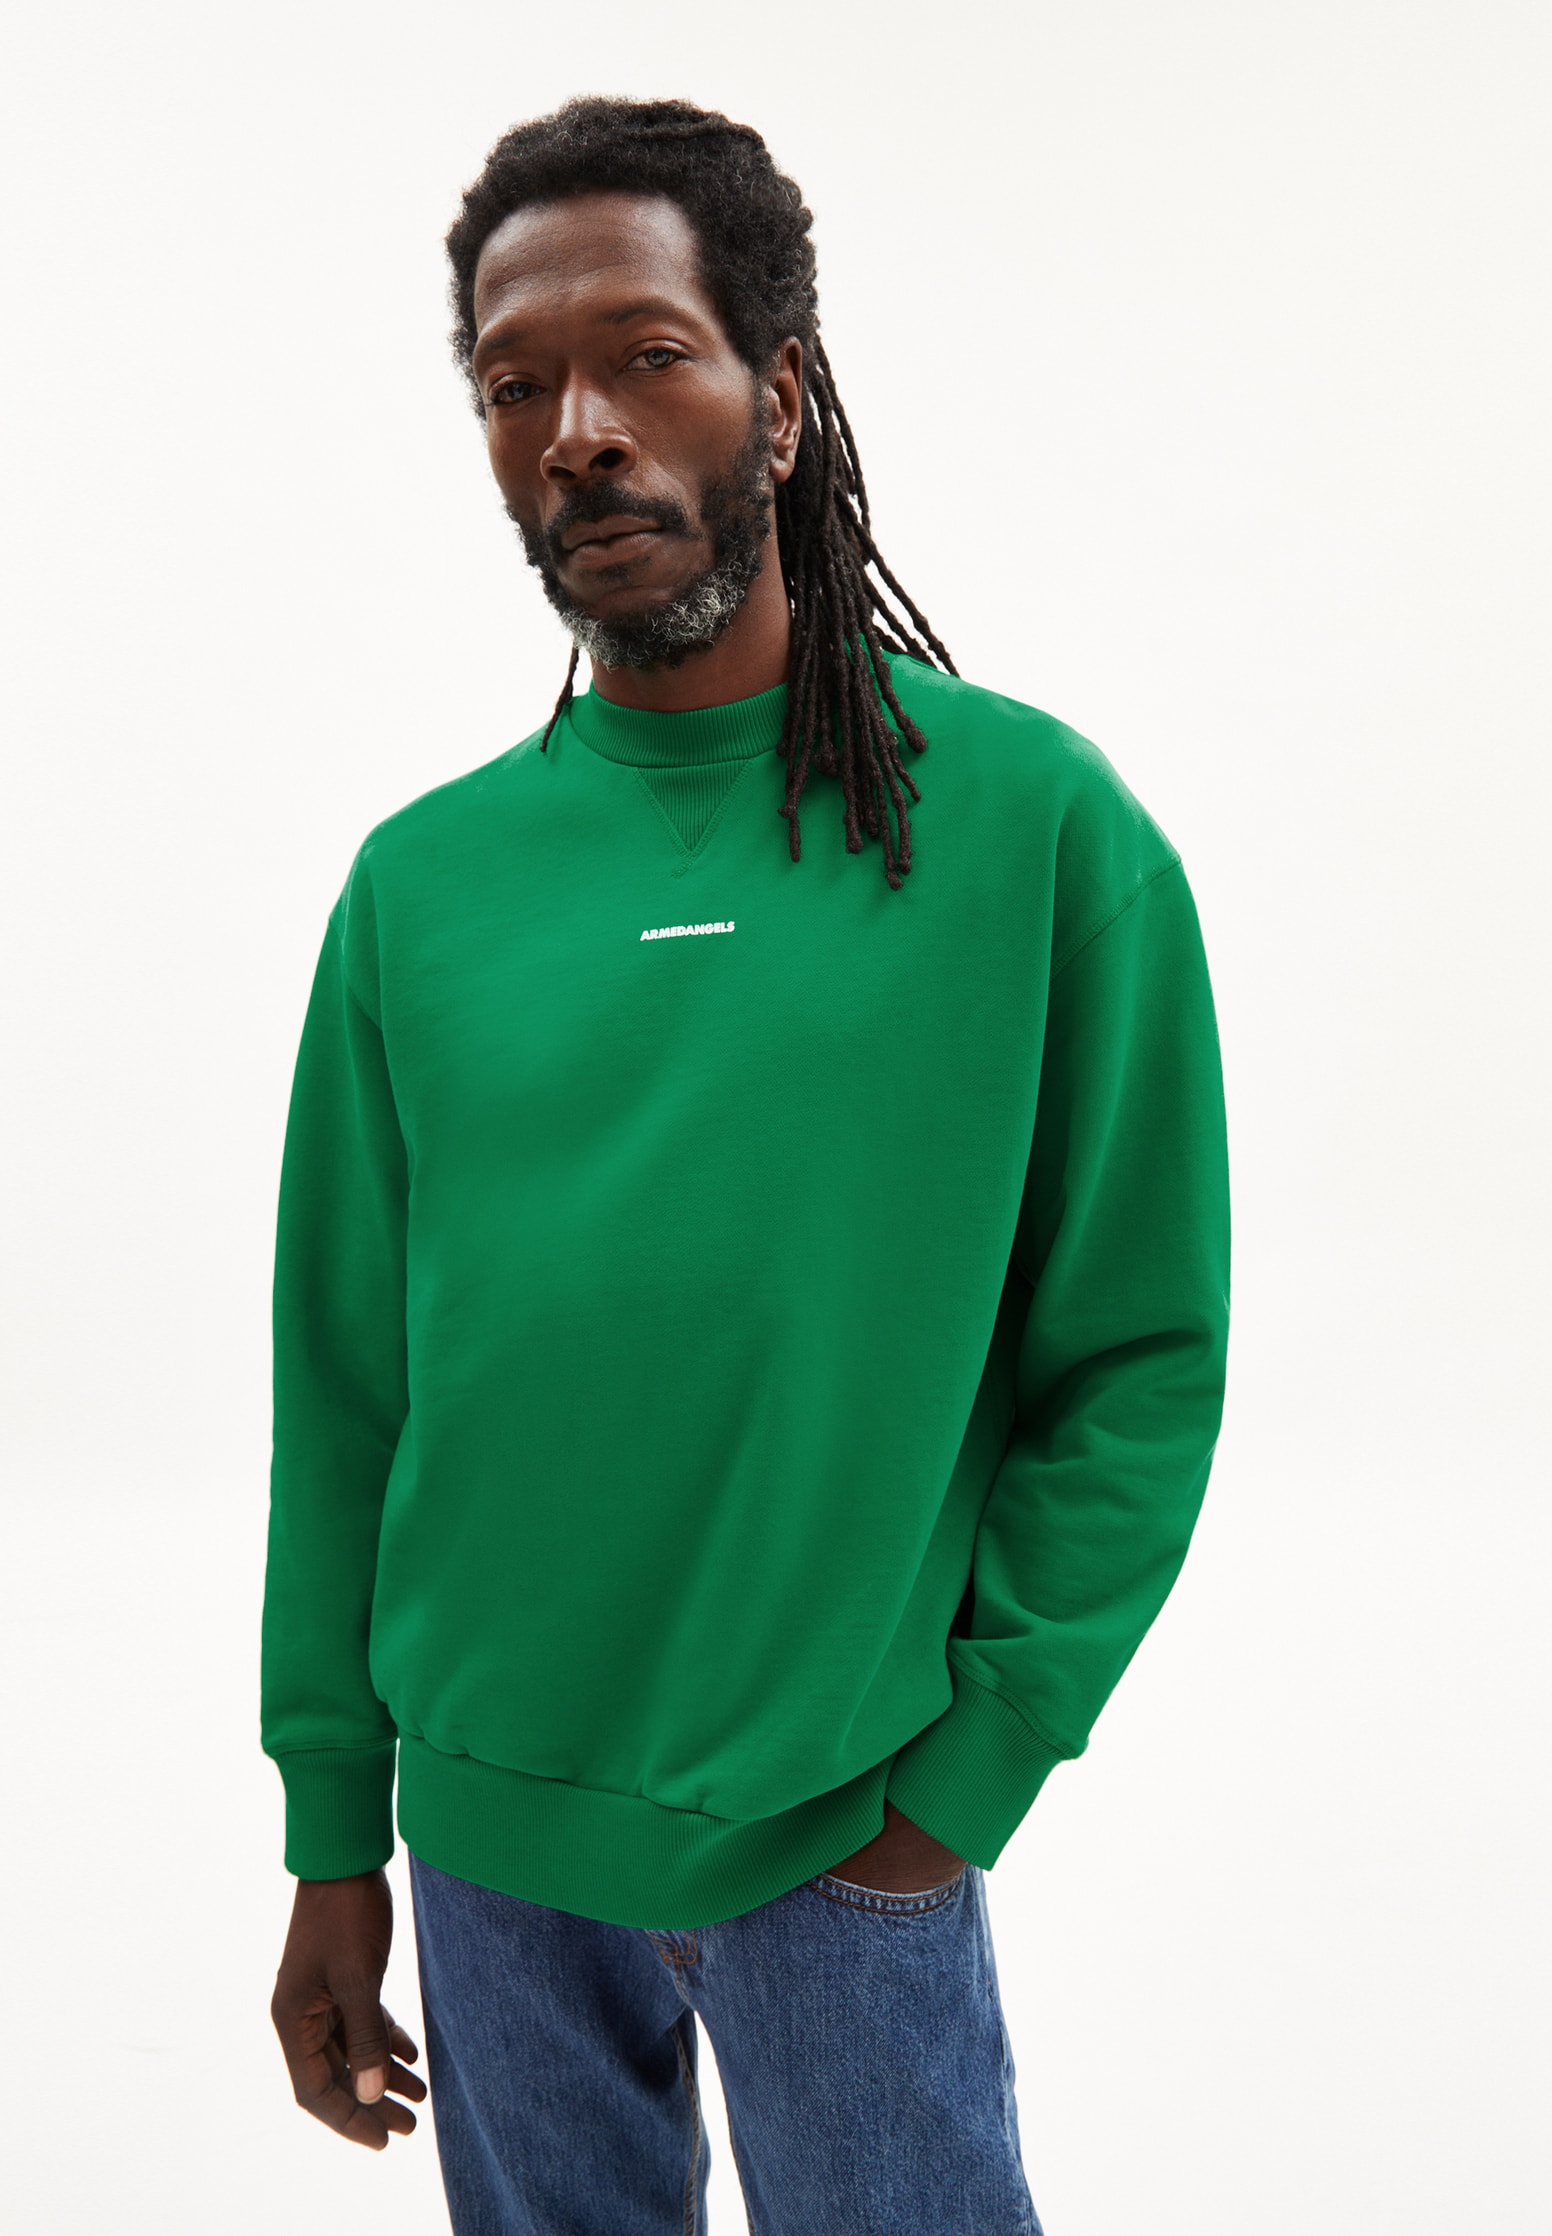 ARMEDANGELS Thaao Premium Sweatshirt flash green XL